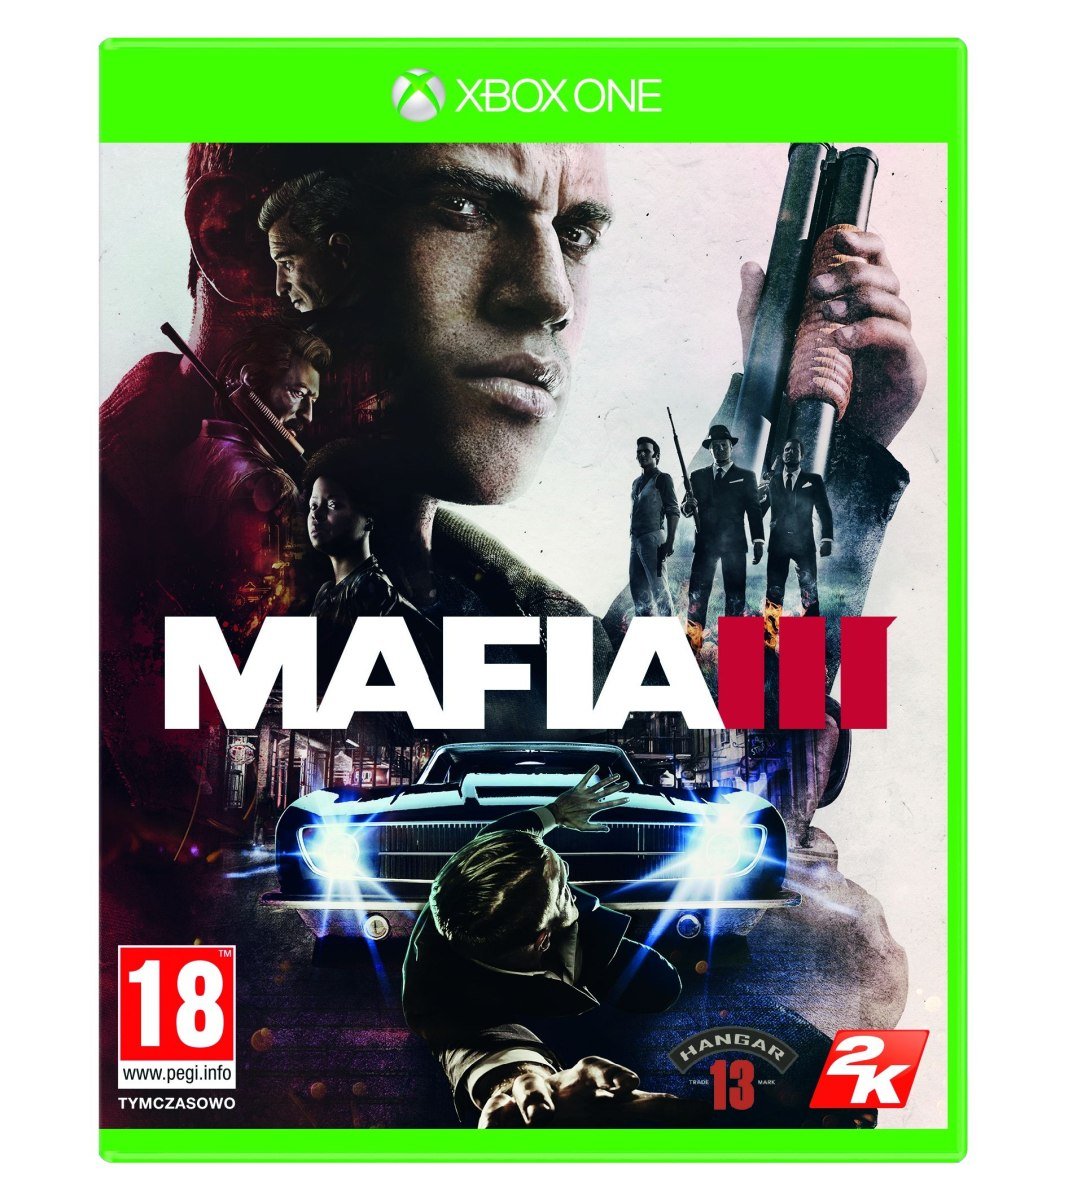 Mafia III GRA XBOX ONE